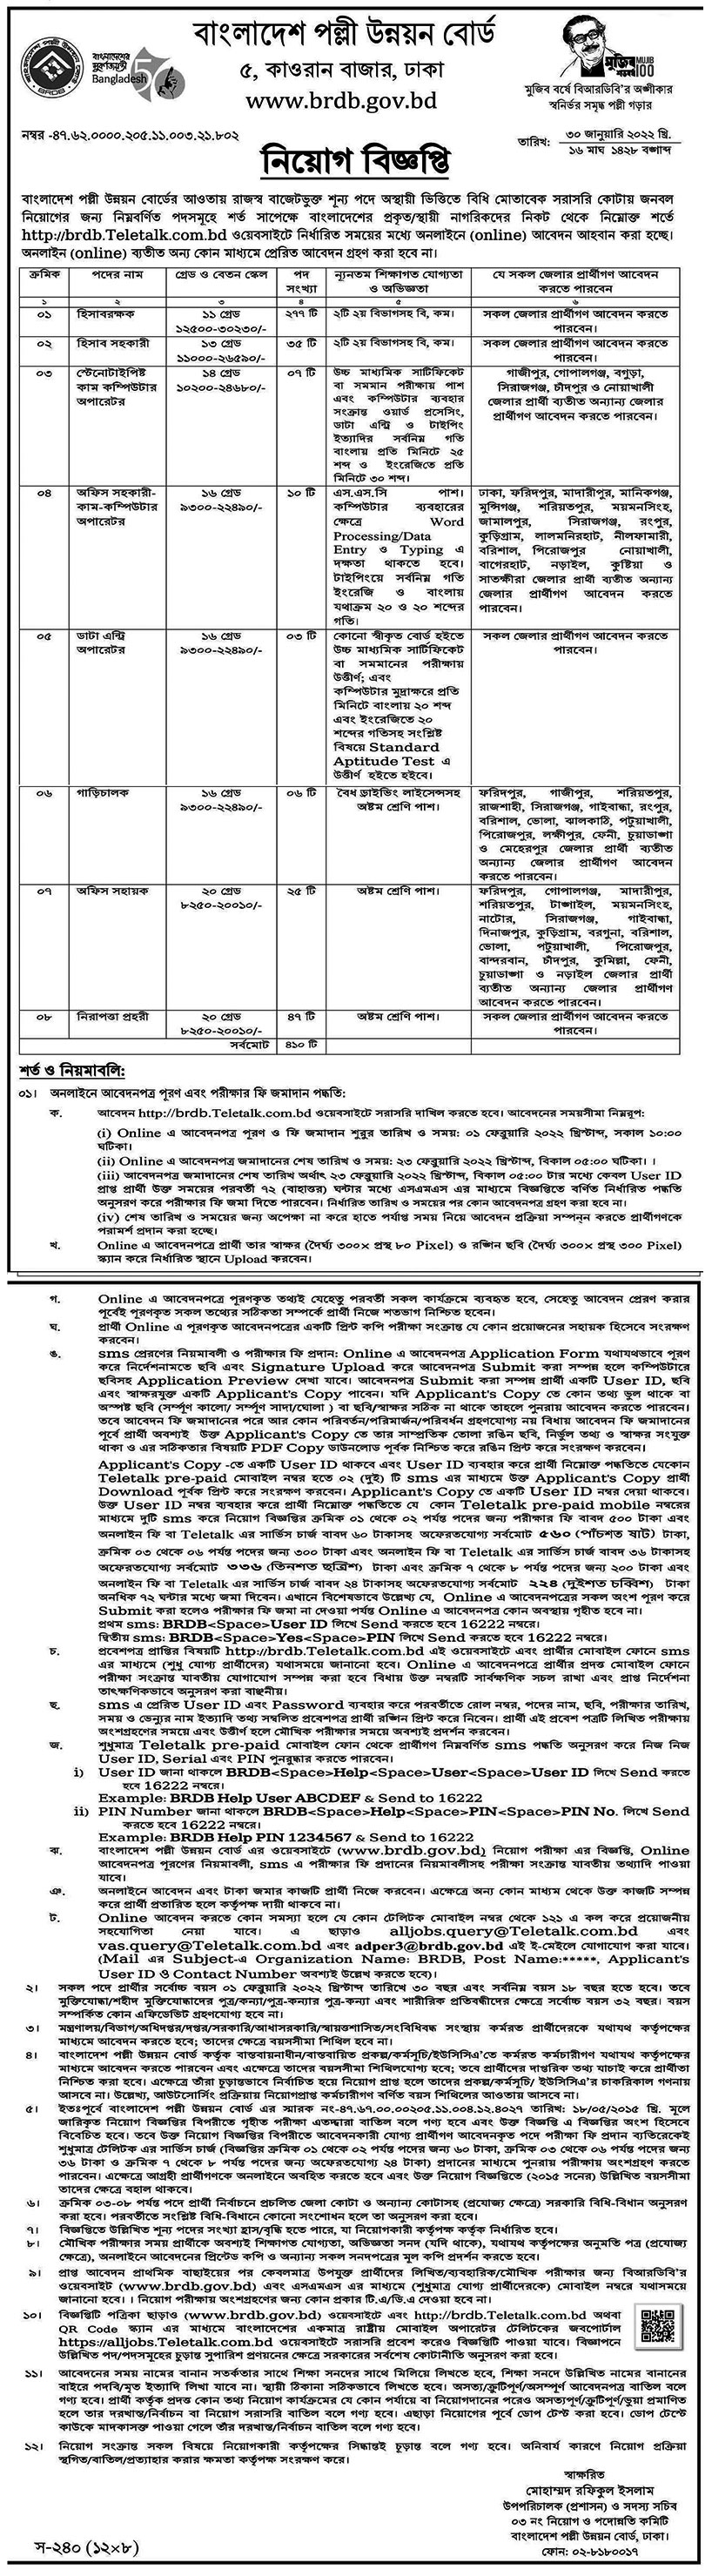 Bangladesh Rural Development Board Job Circular